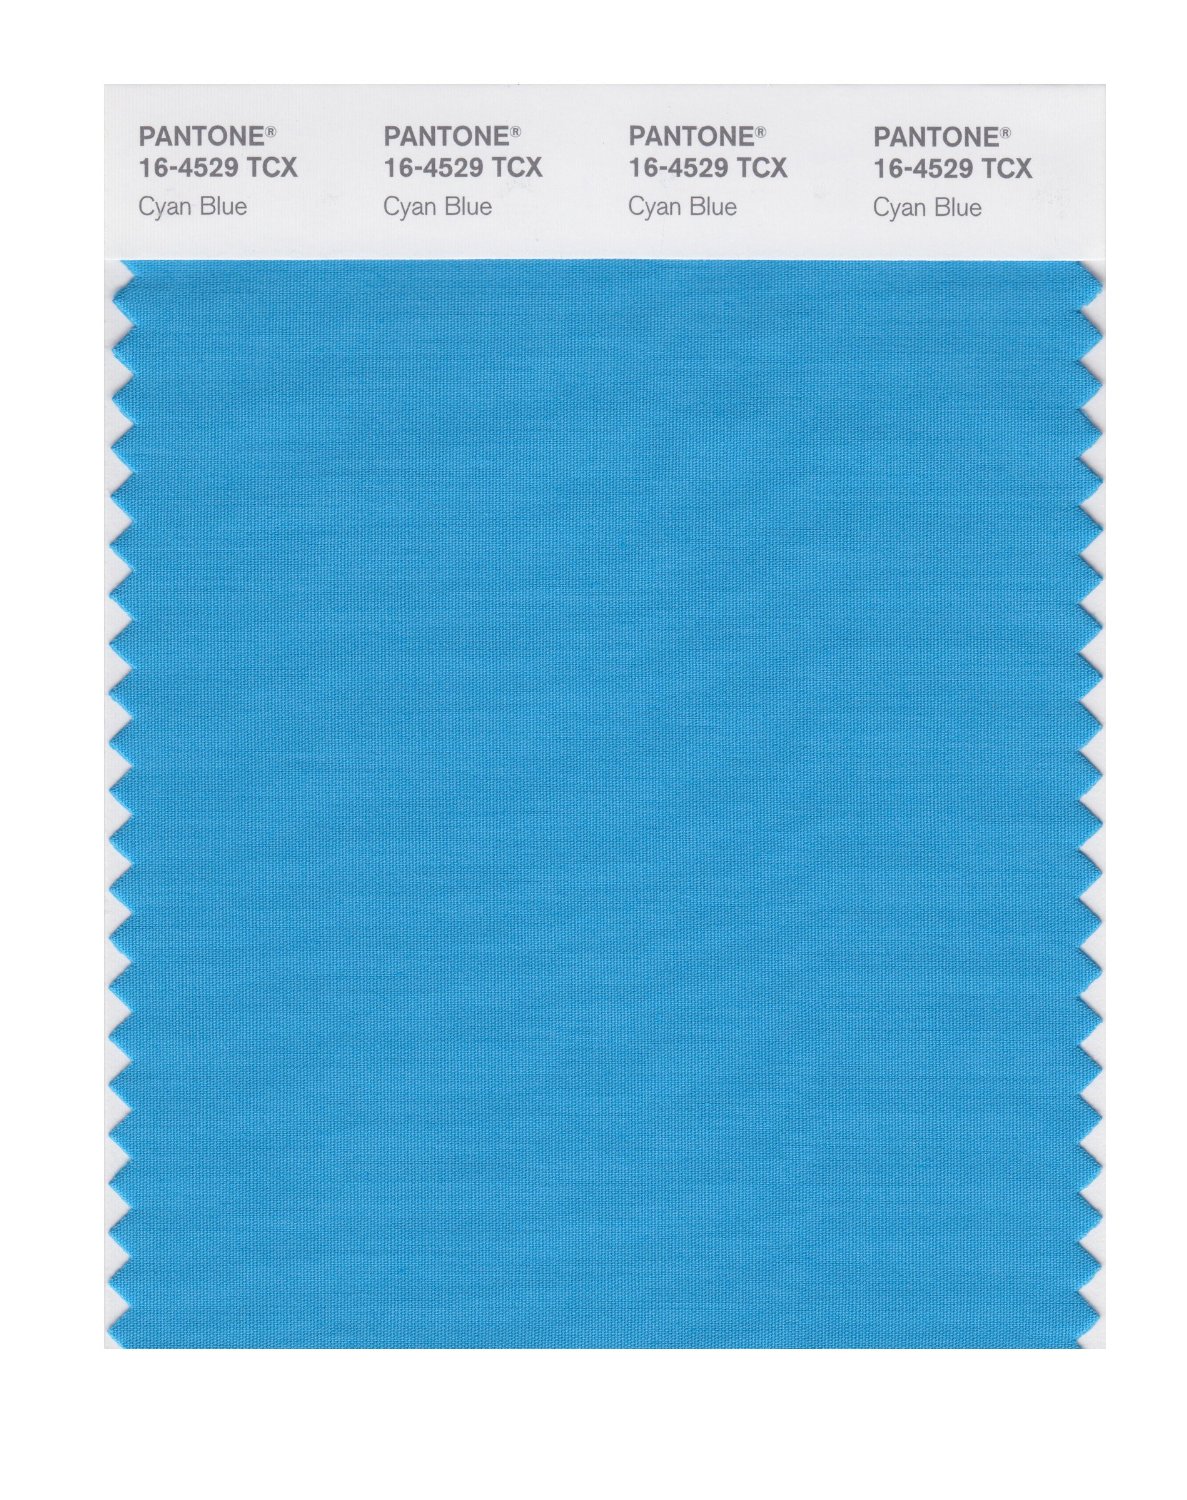 BUY Pantone Cotton Swatch 16-4529 Cyan Blue